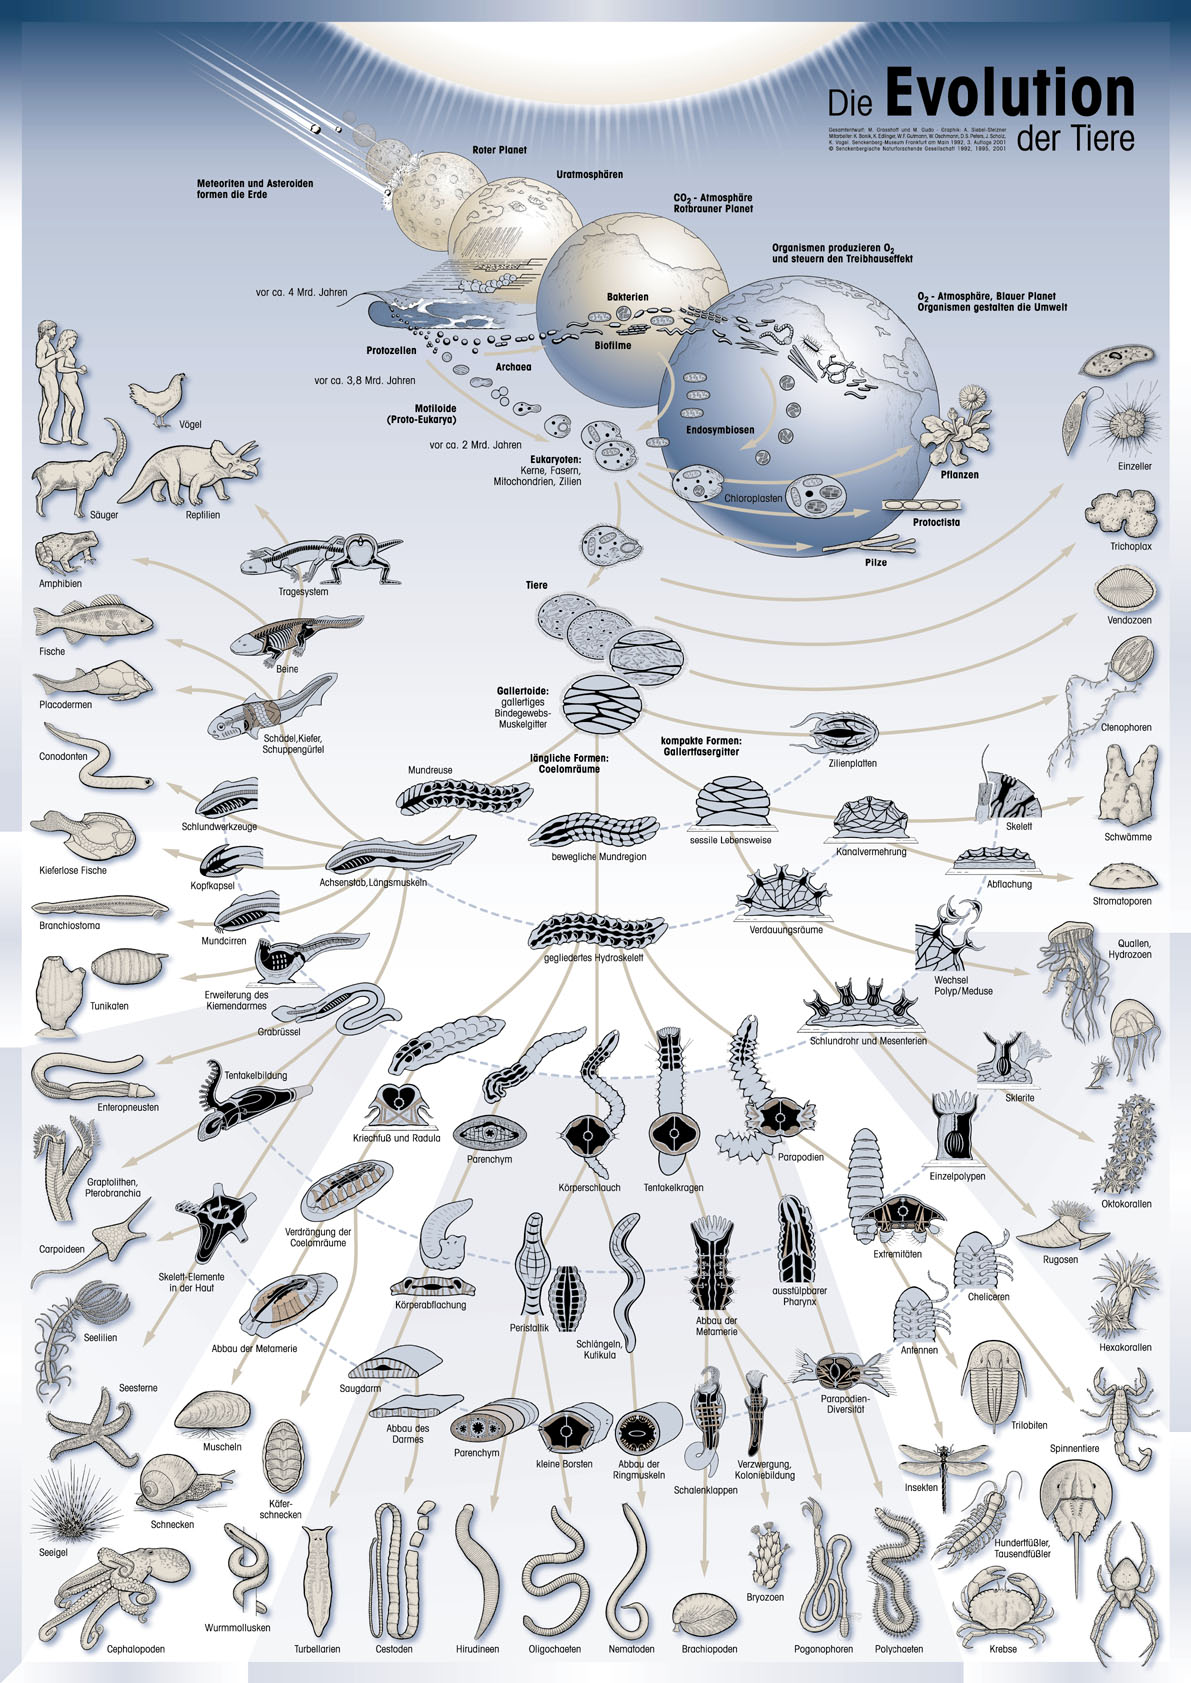 GeoScienze: Evolution of Animal Species